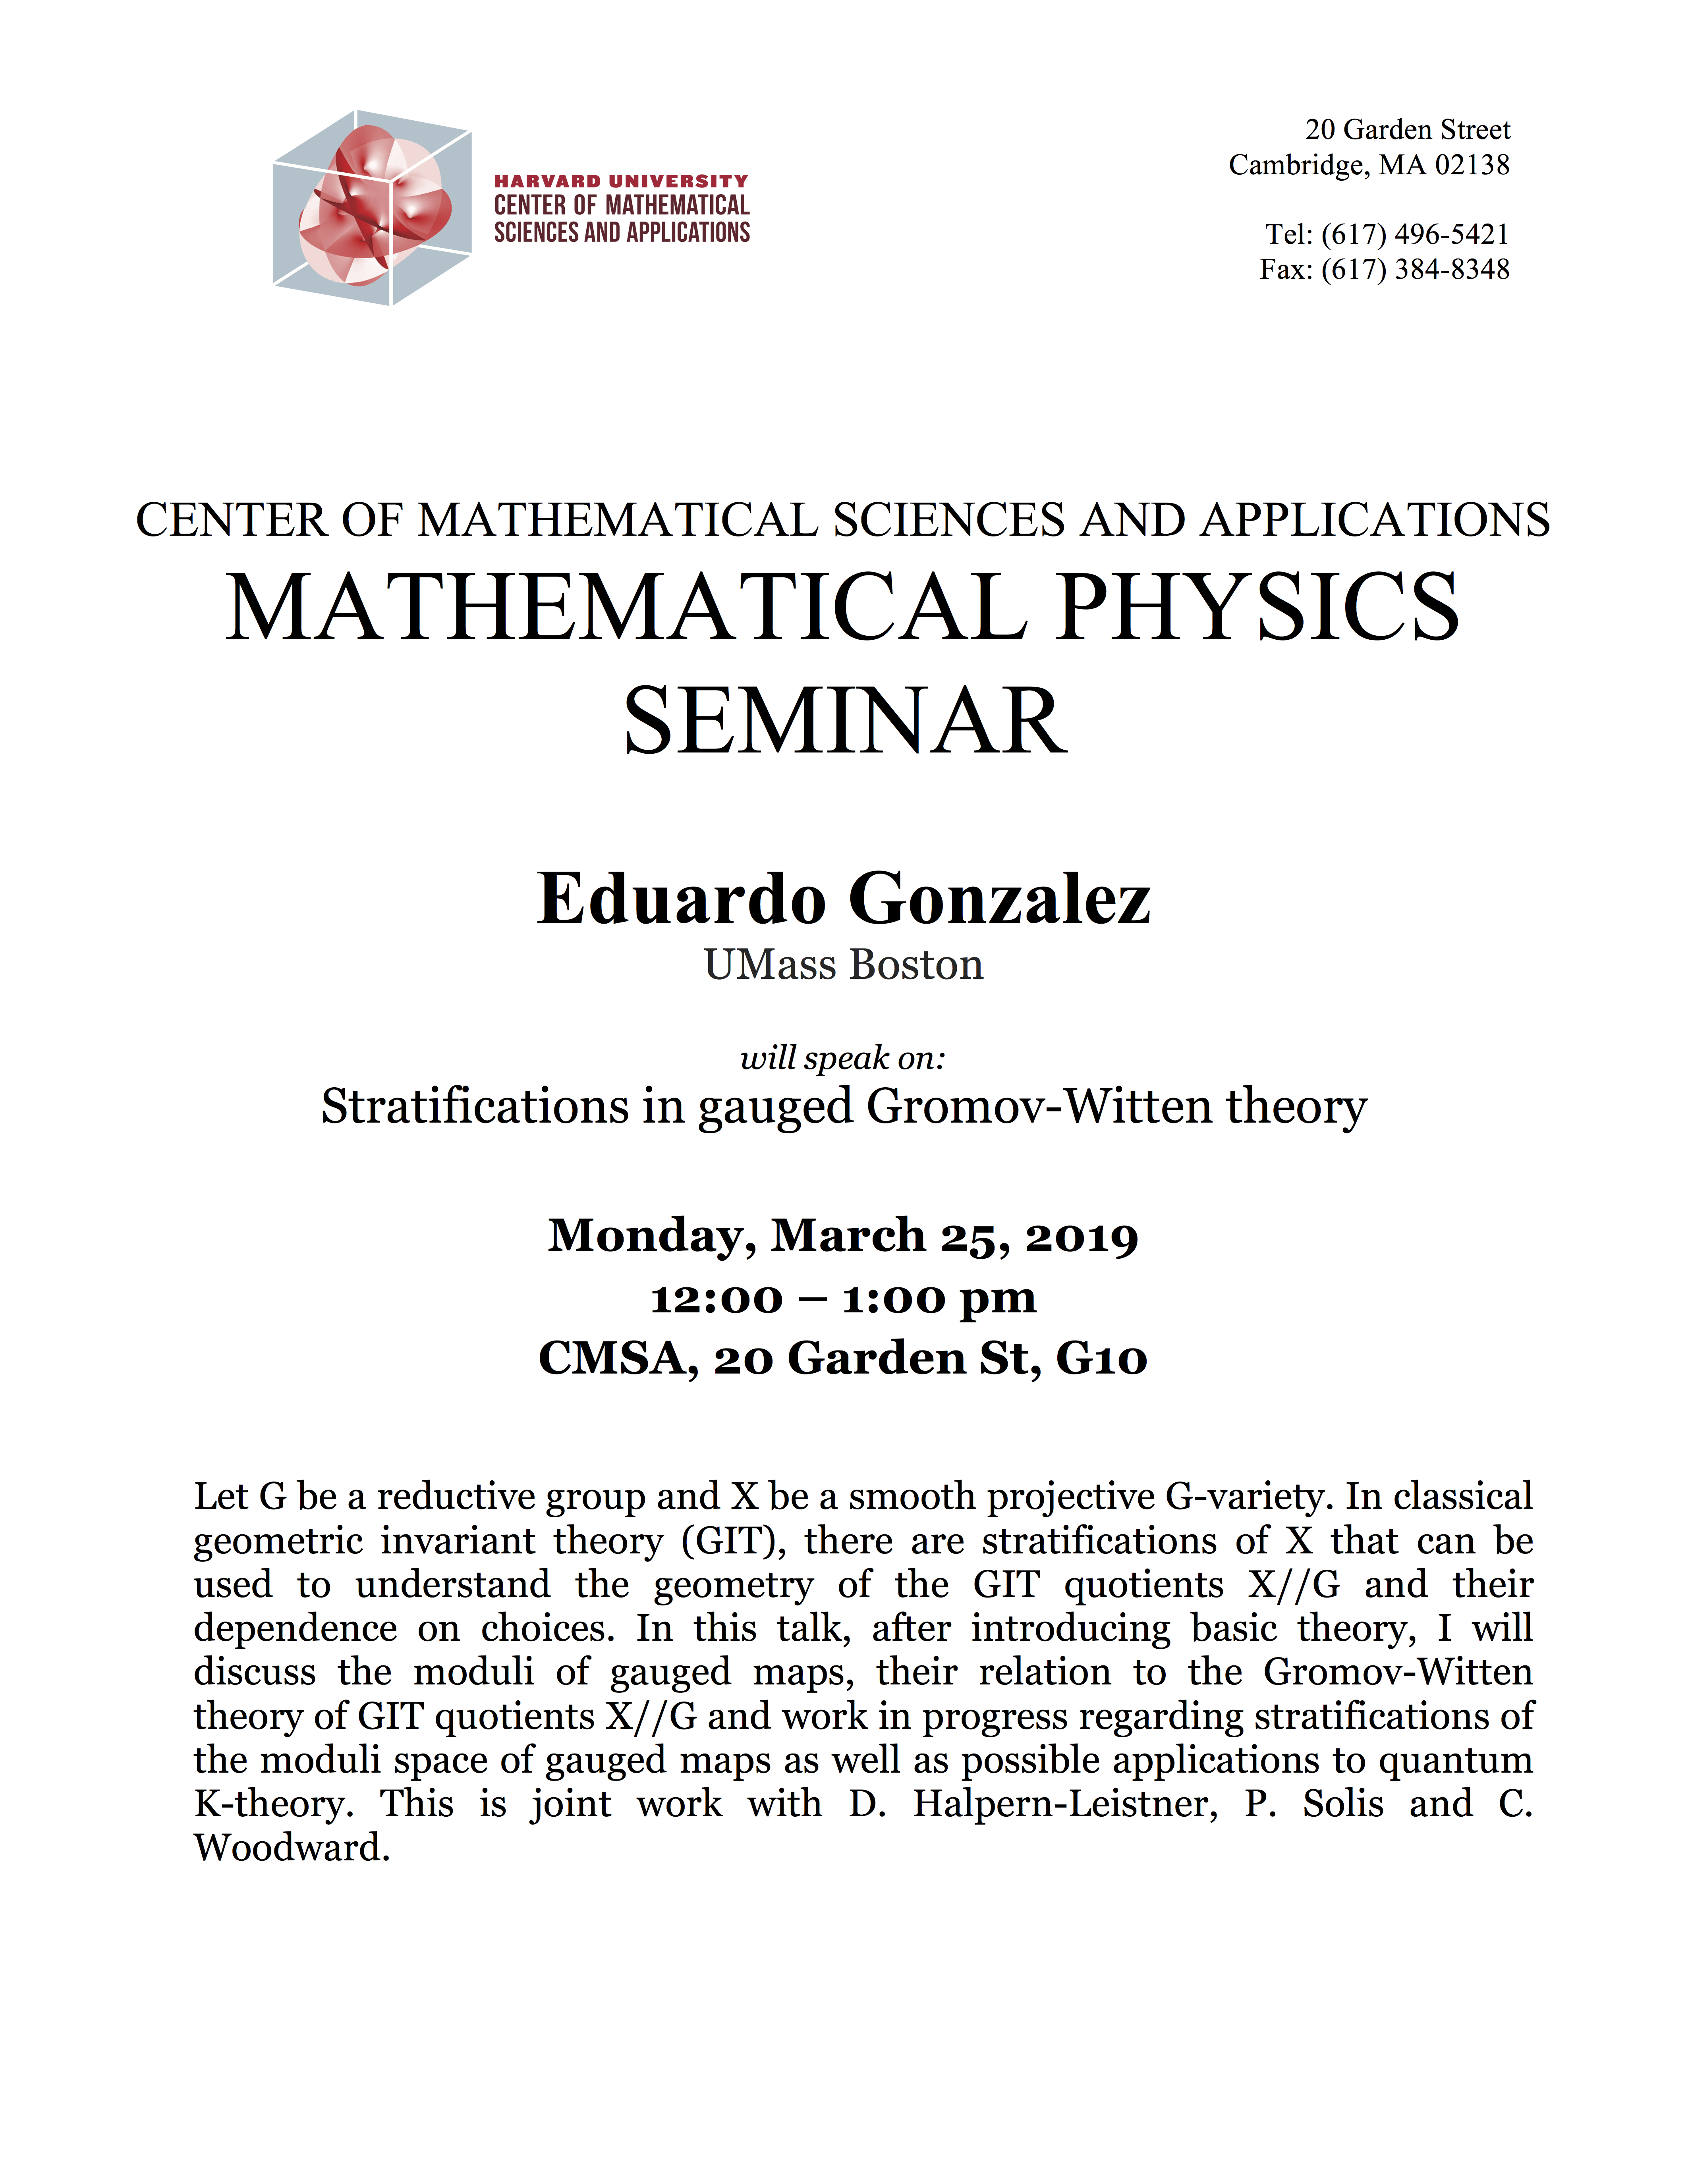 3/25/2019 Mathematical Physics Seminar